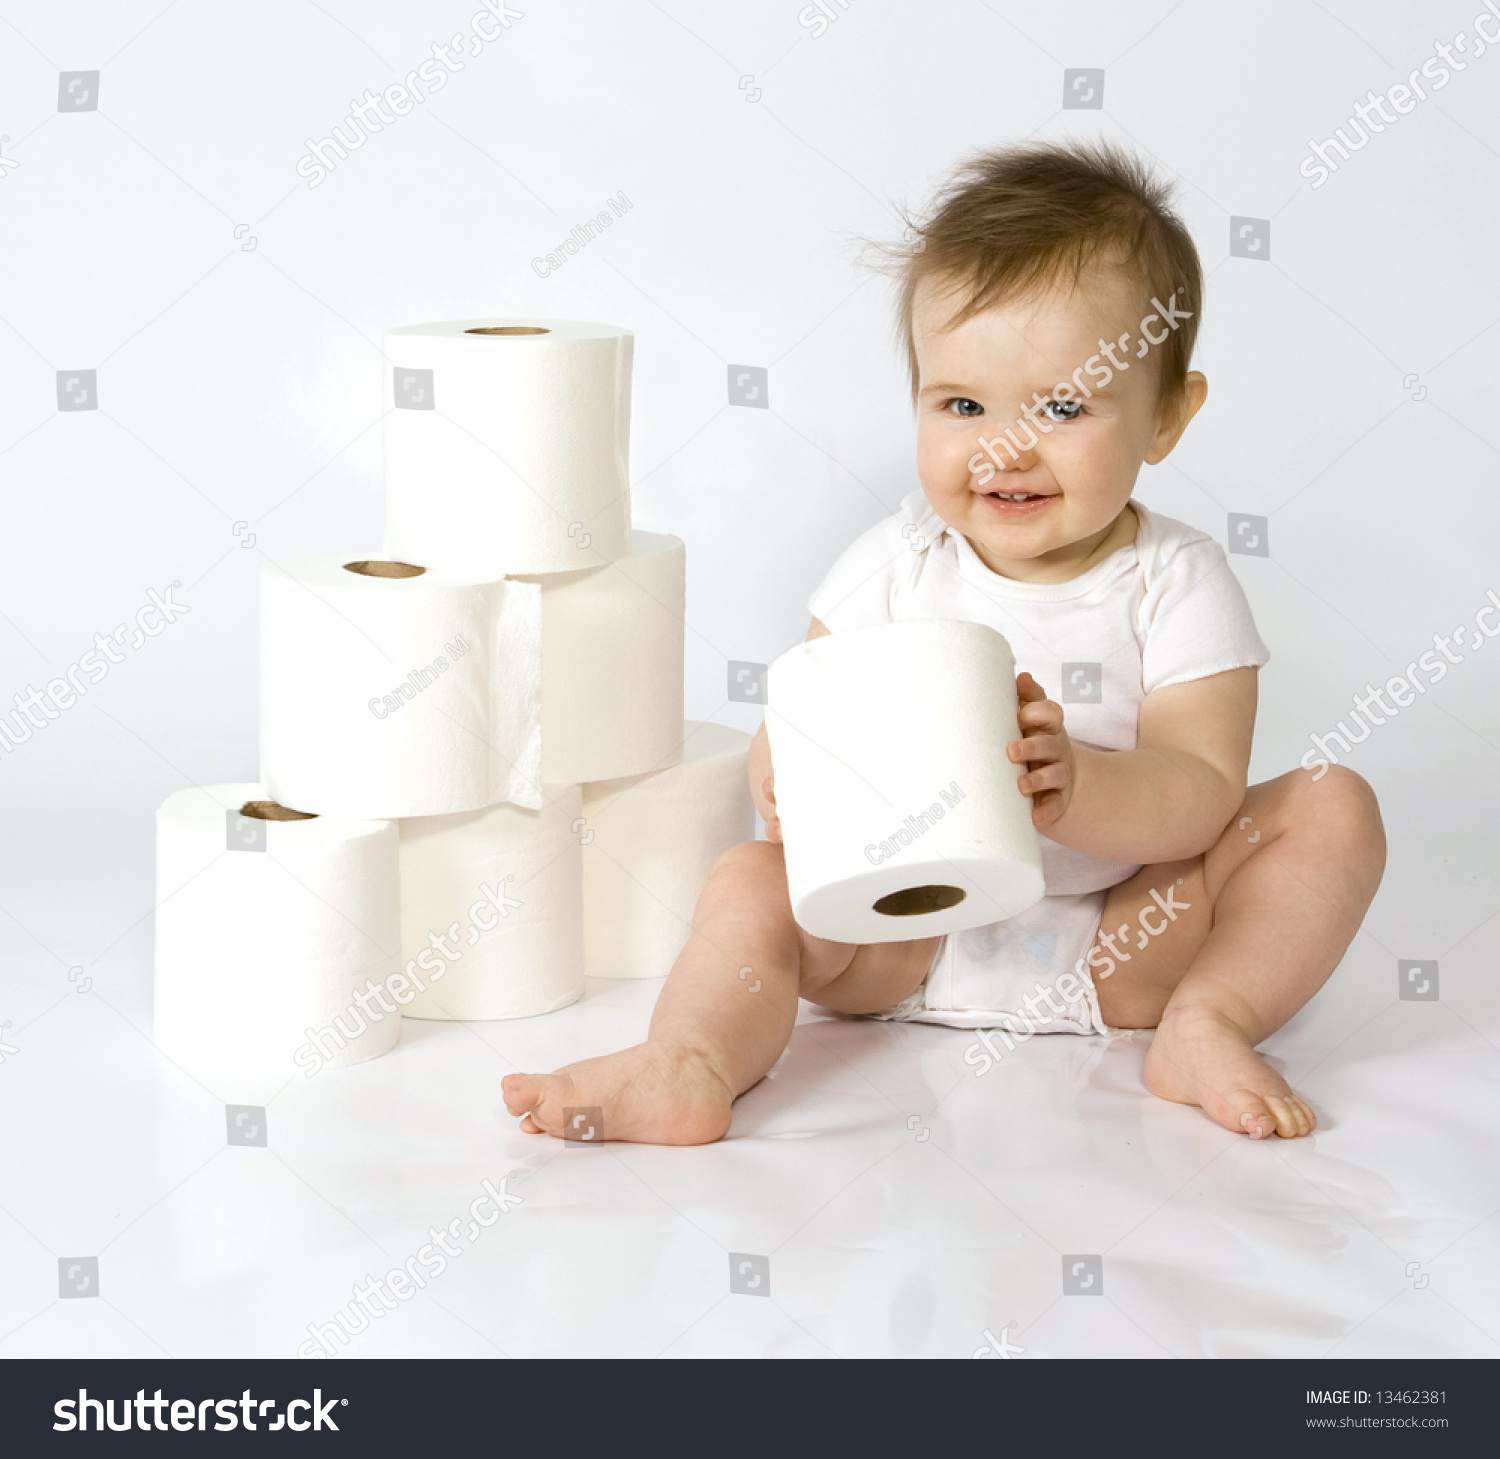 Baby Toilet Paper Stock Photo 13462381 - Shutterstock